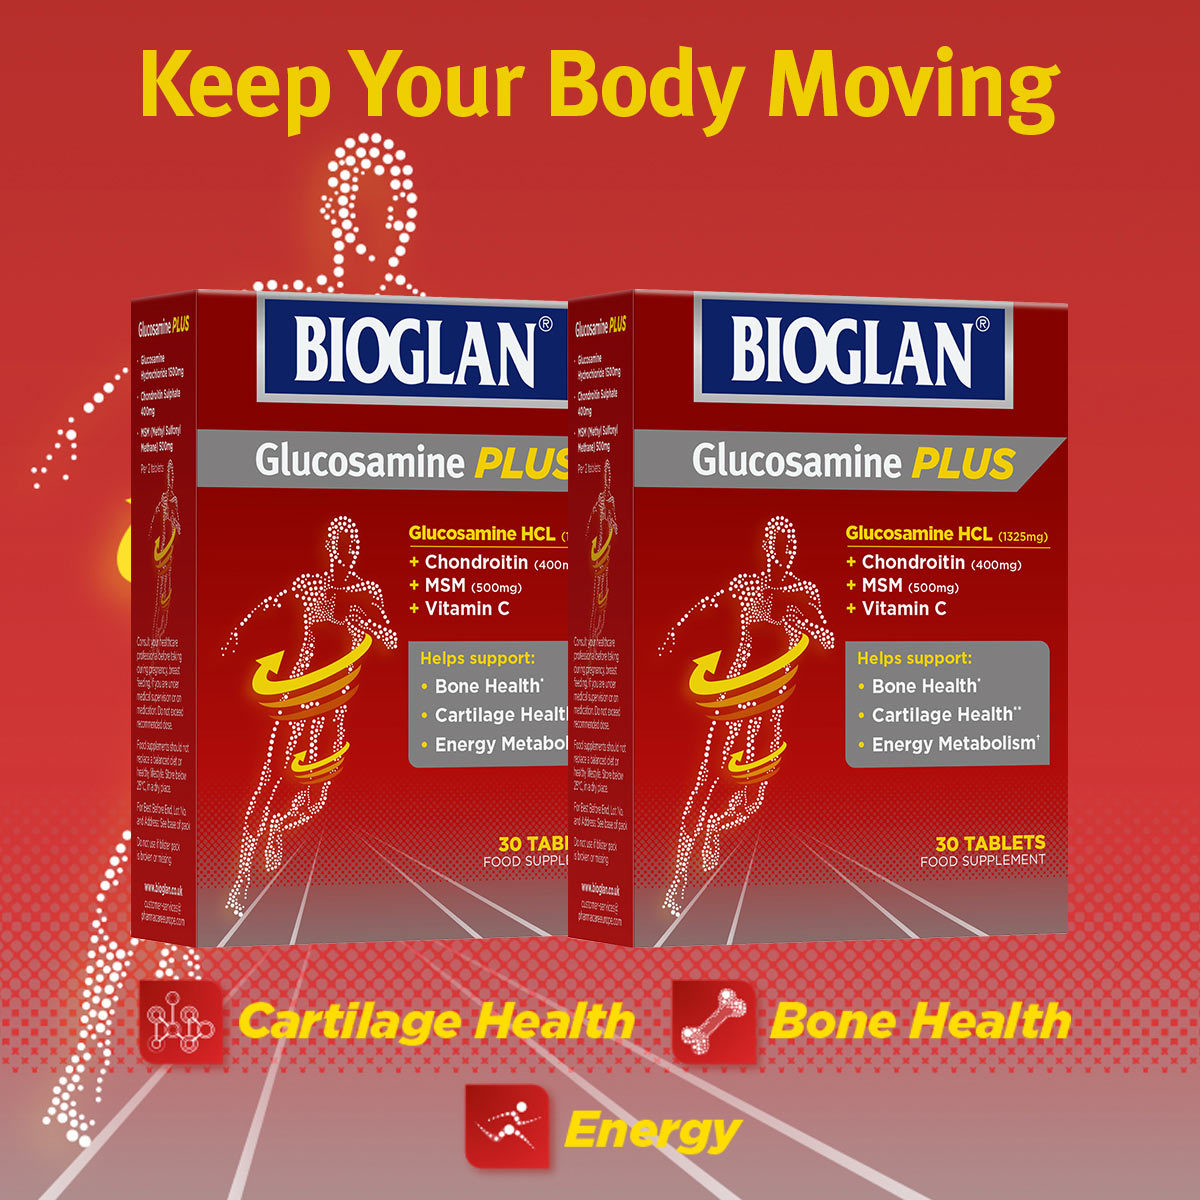 2 Red boxes of Bioglan Glucosamine Plus highlighting health benefits